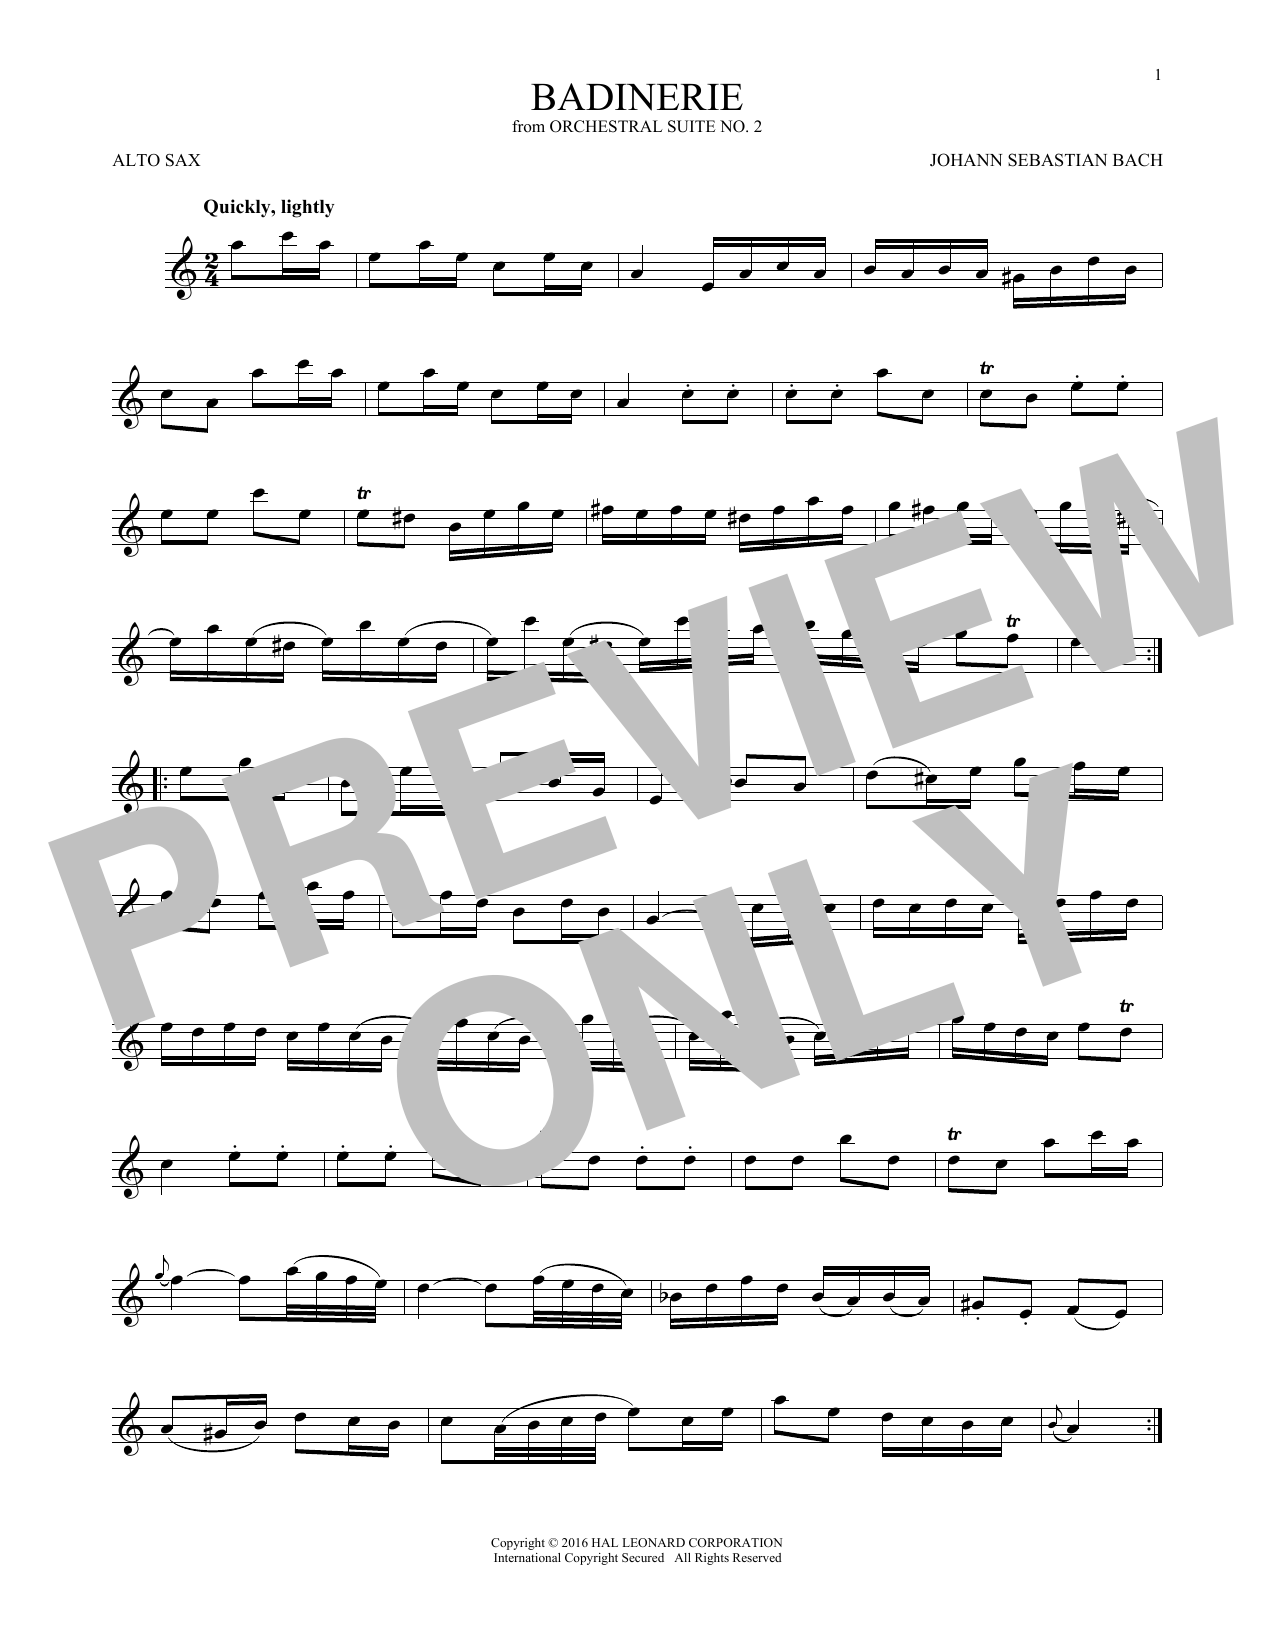 Johann Sebastian Bach Badinerie (Suite No. 2) Sheet Music Notes & Chords for Alto Saxophone - Download or Print PDF